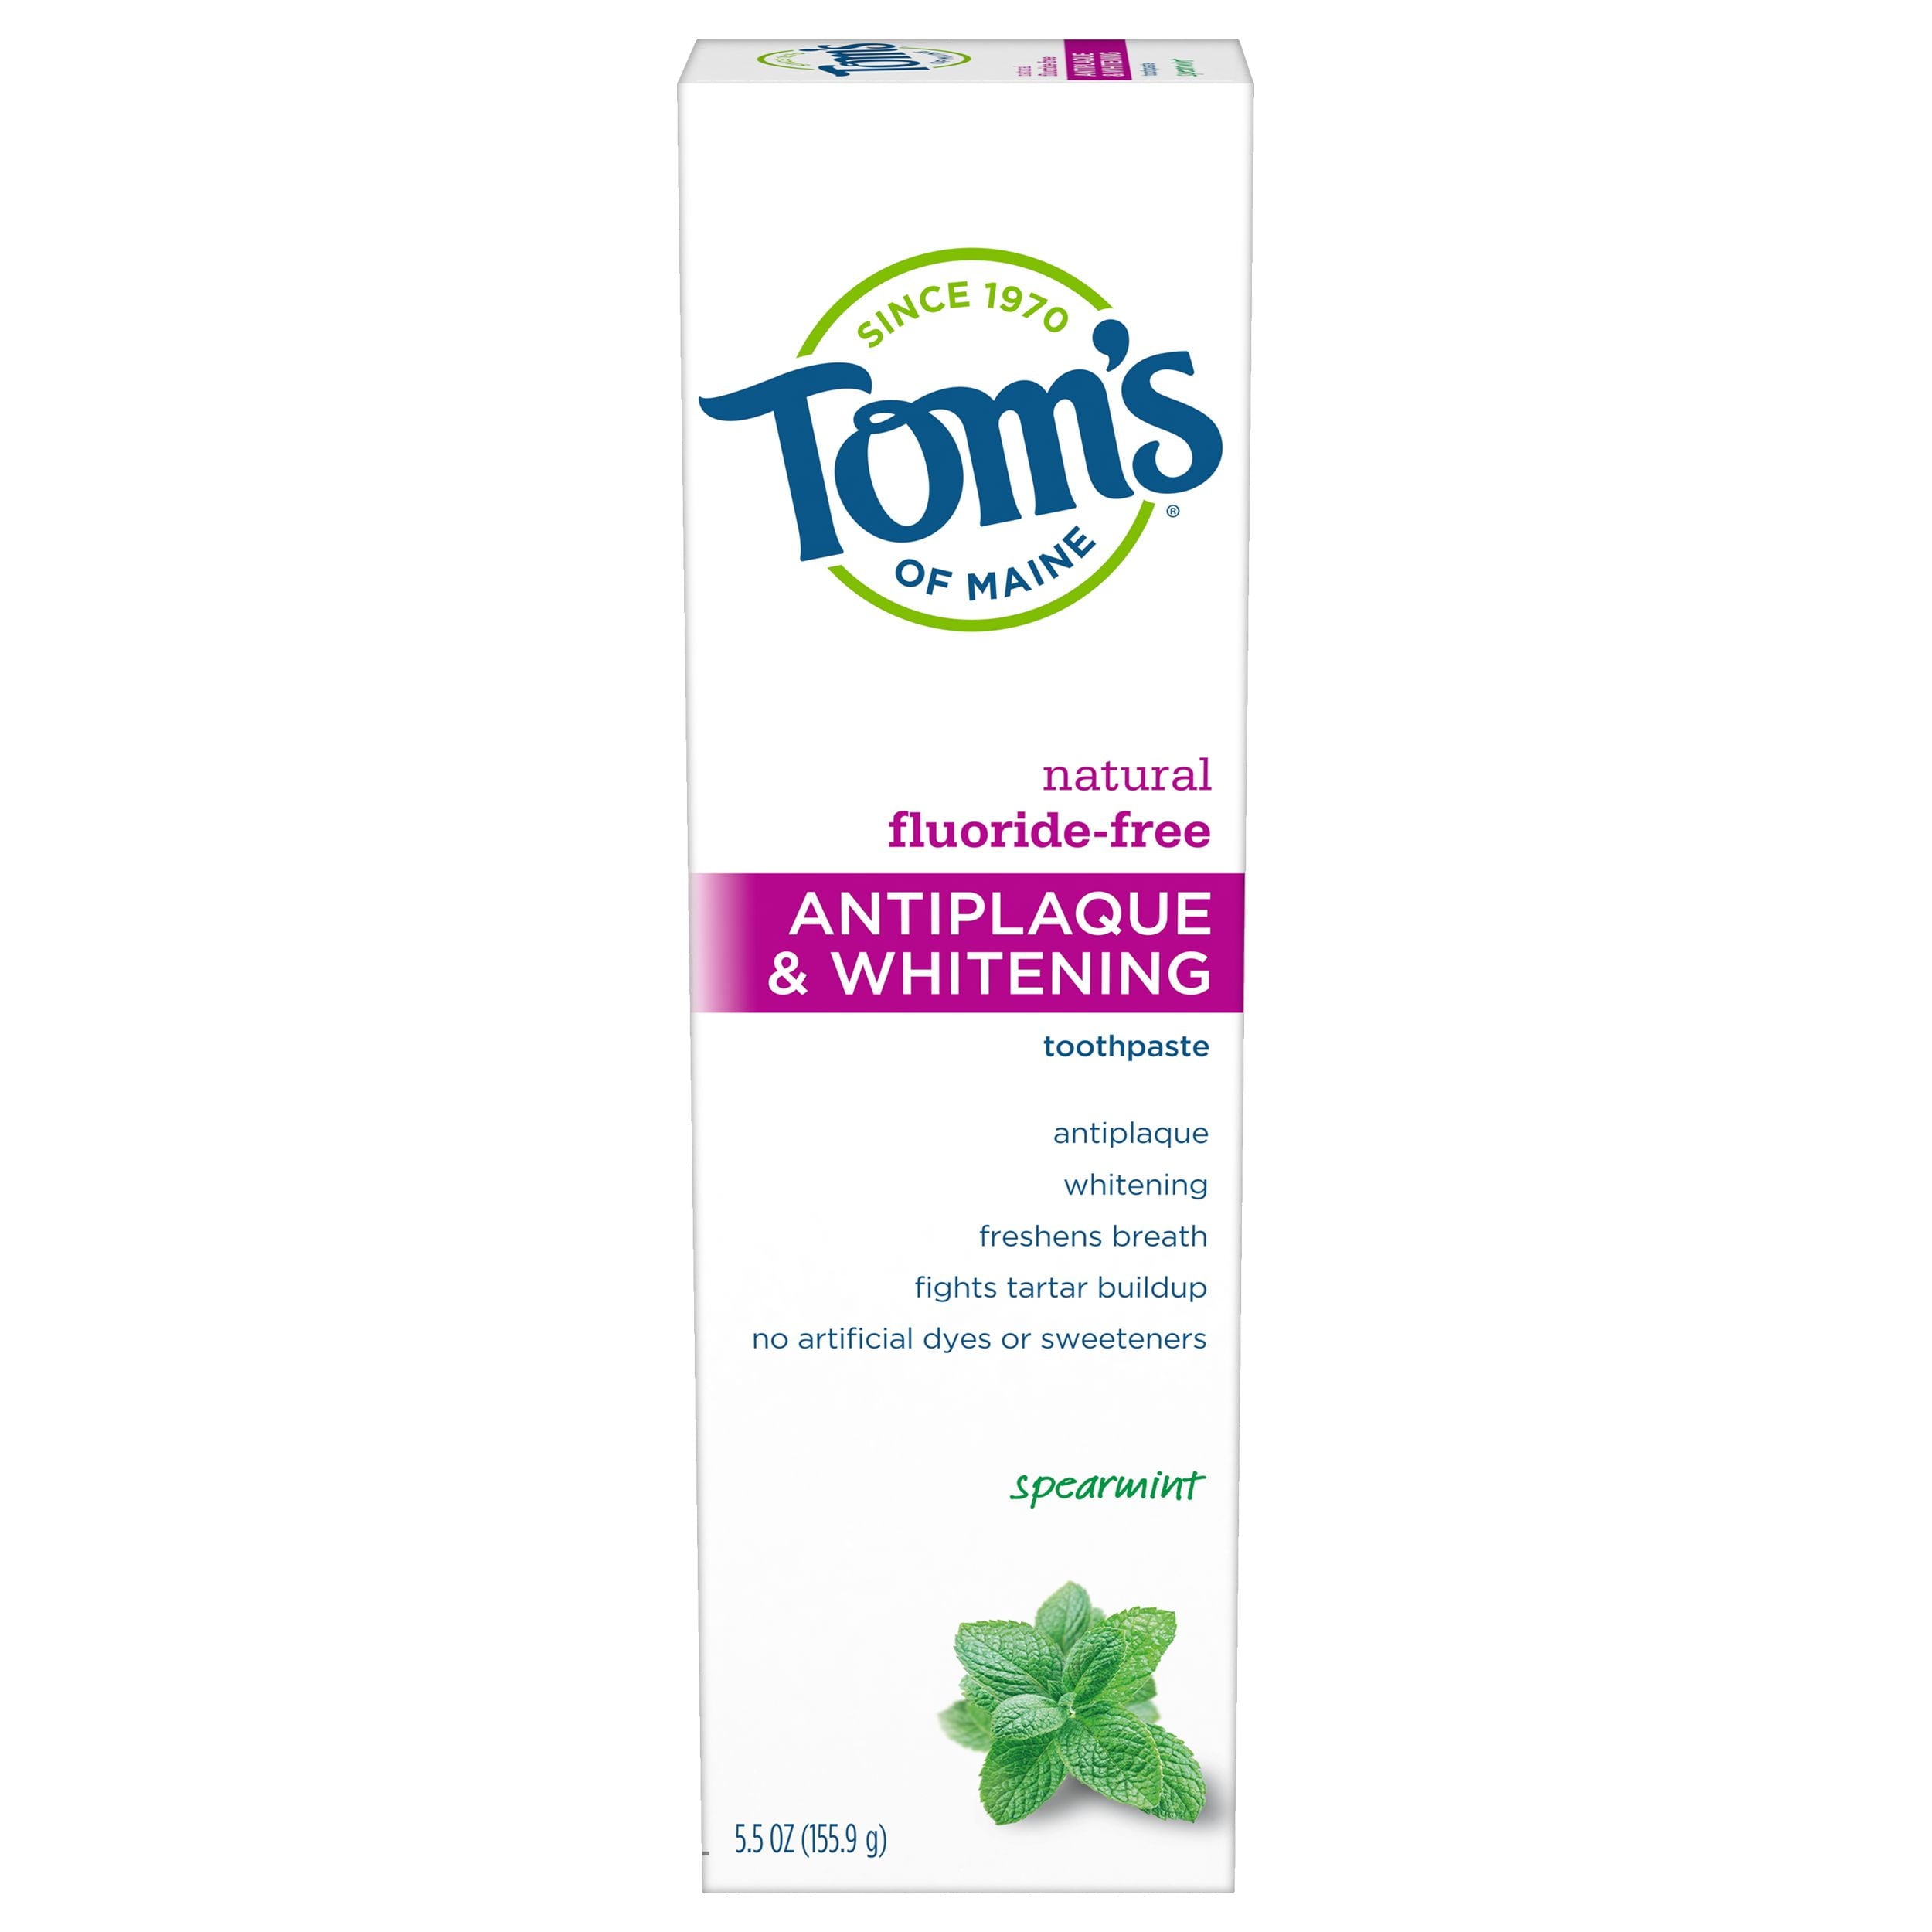 Tom's of Maine Antiplaque and Whitening Toothpaste Spearmint 5.5 Oz Tube